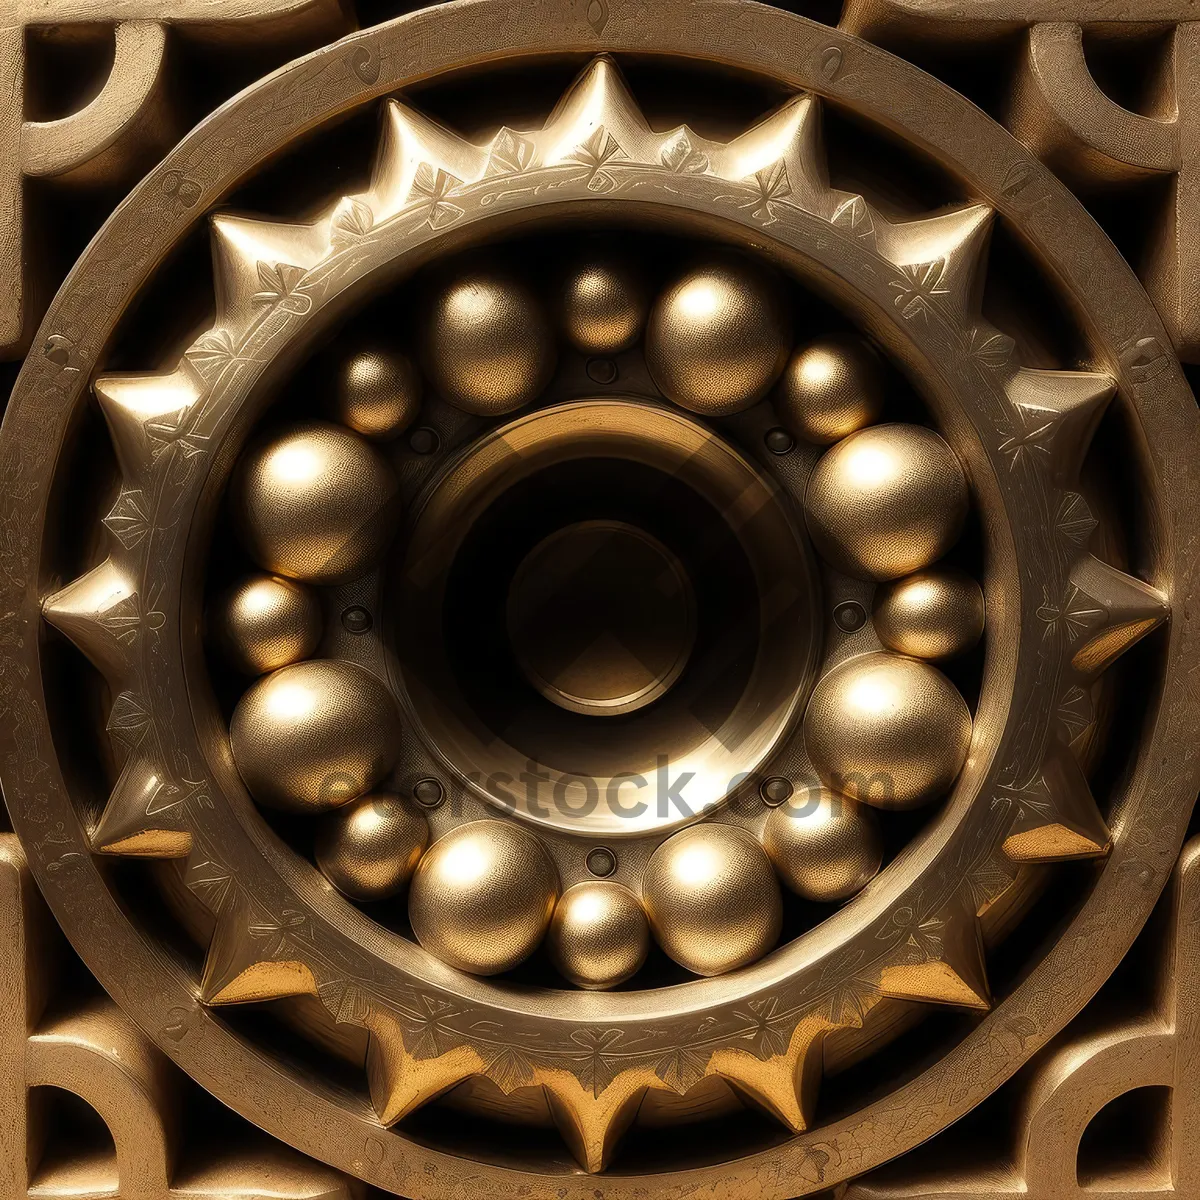 Picture of Mechanical Clutch Gear Device - Steel Mechanism